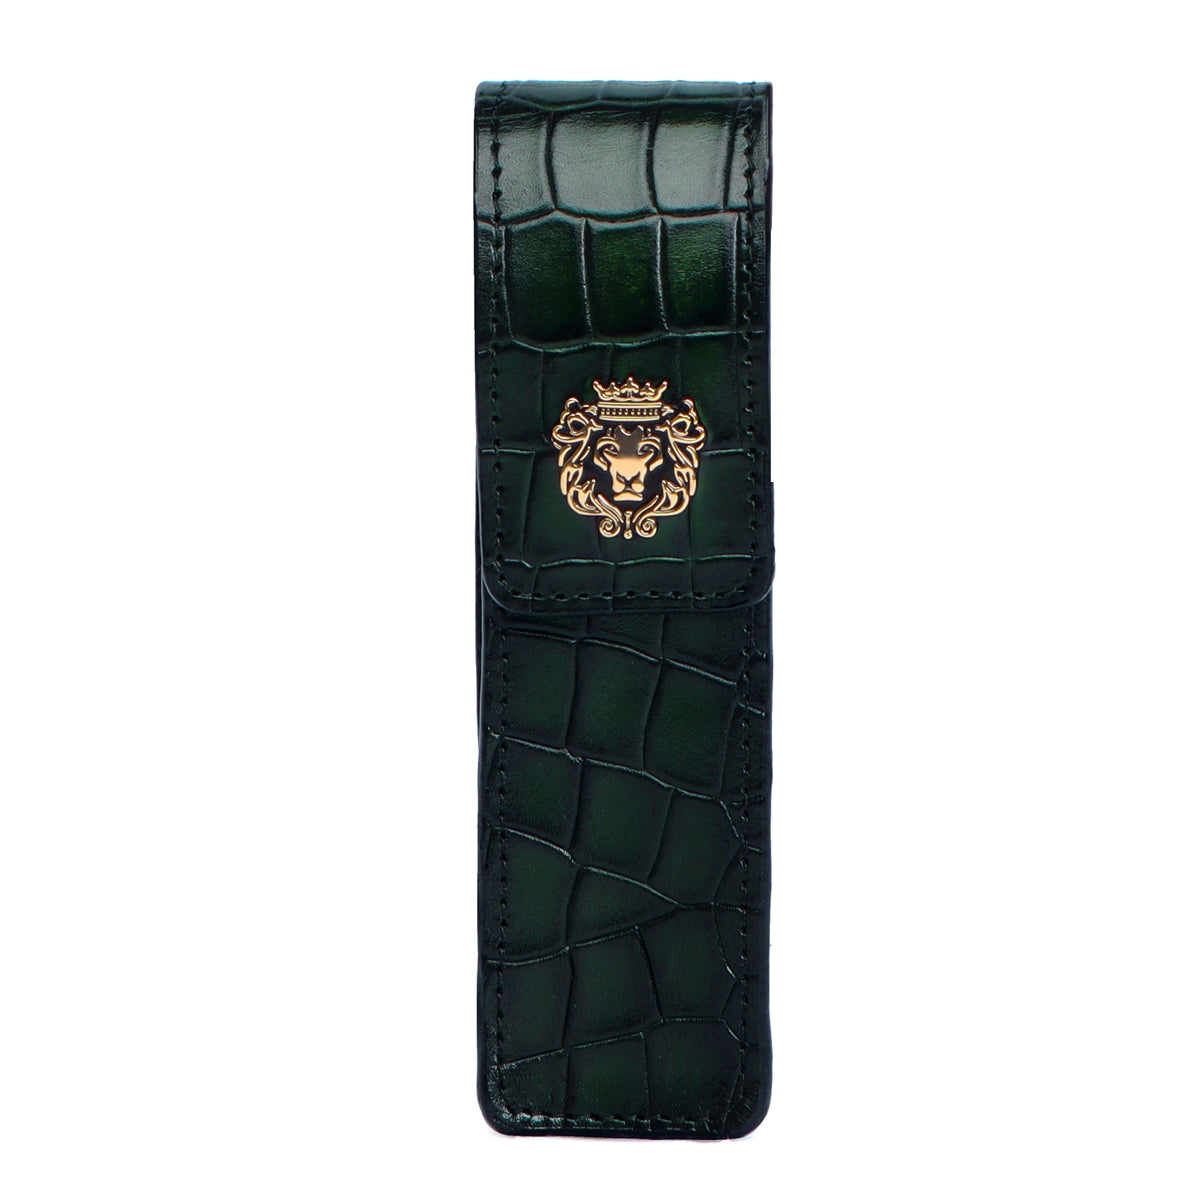 Smokey Green Cut Croco Textured Leather Pen Holder with Metal Lion Logo By Brune & Bareskin